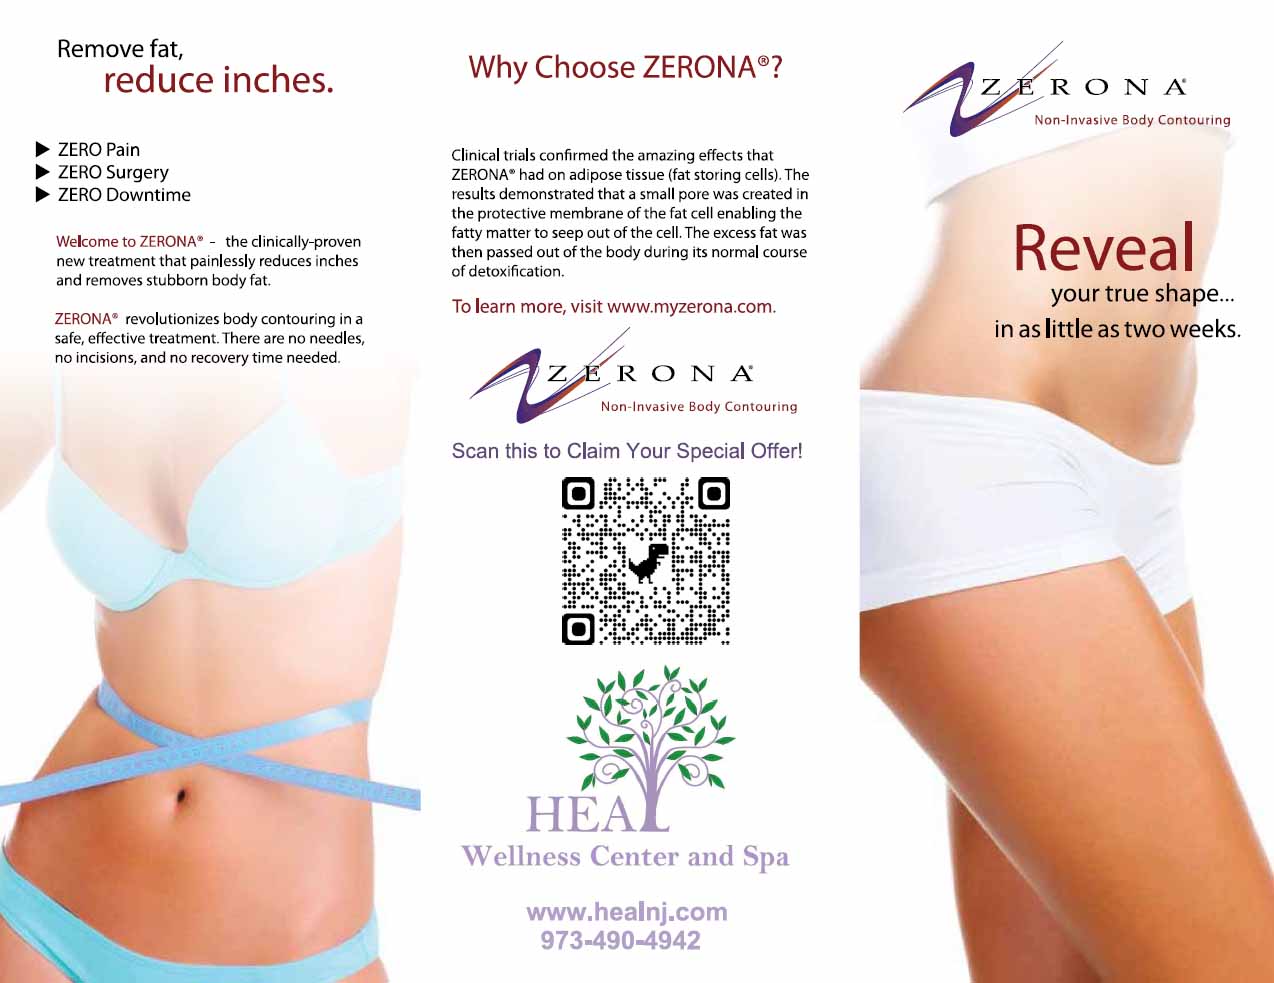 Zerona - Z6 Laser, Body Contourong, Laser Slimming Program